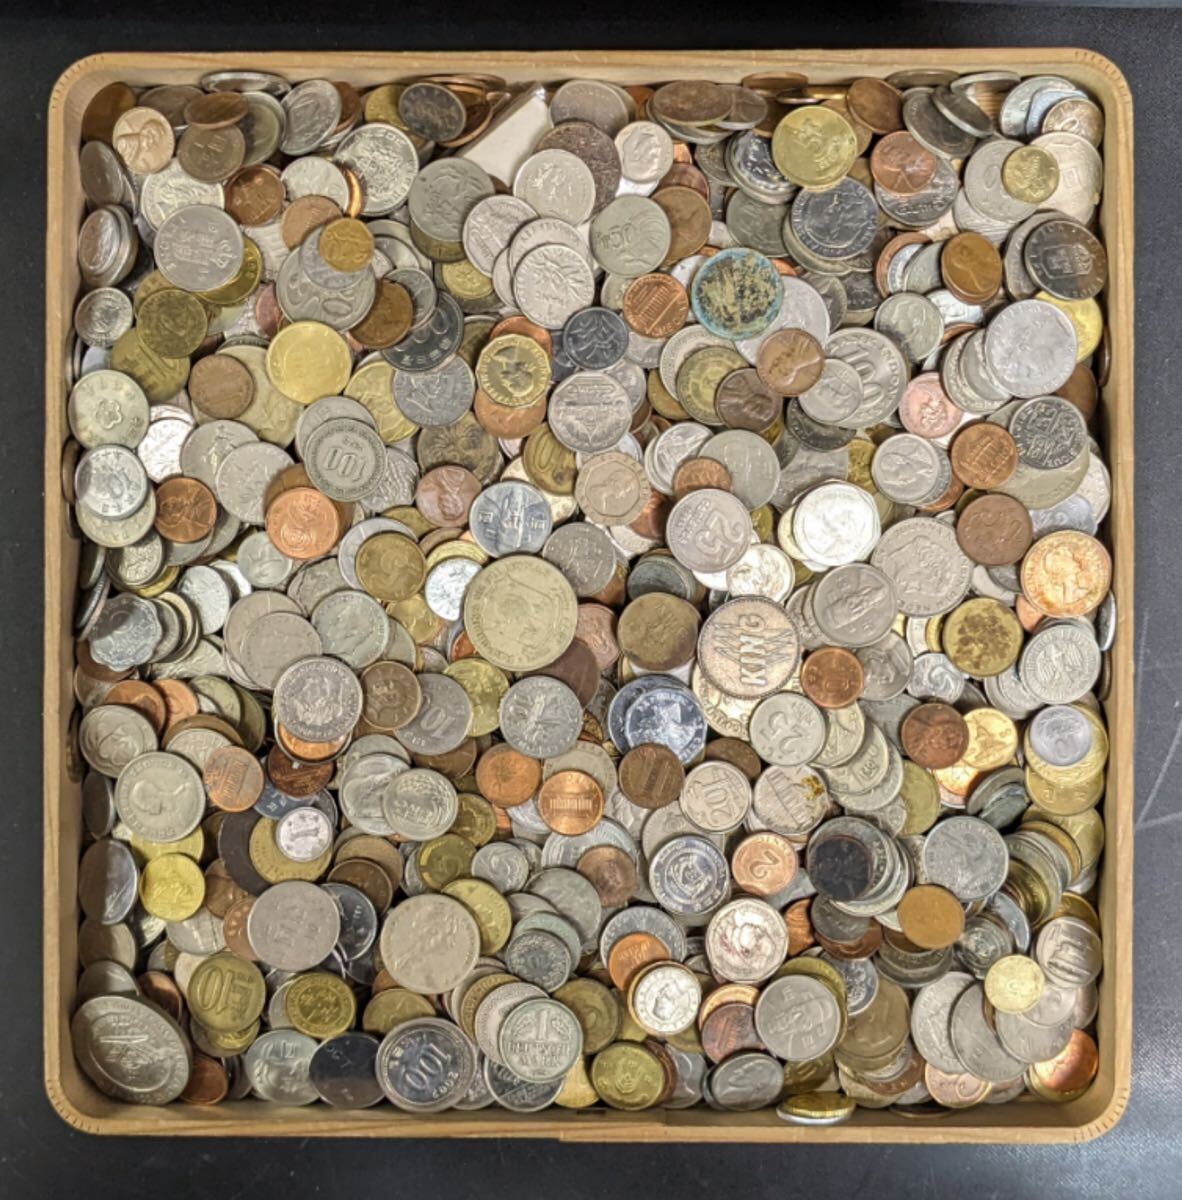 S04302 古美術 古銭 貨幣 硬貨 硬幣 外国銭 世界コイン 大量まとめ 総重量約6.45kg アンティークの画像1